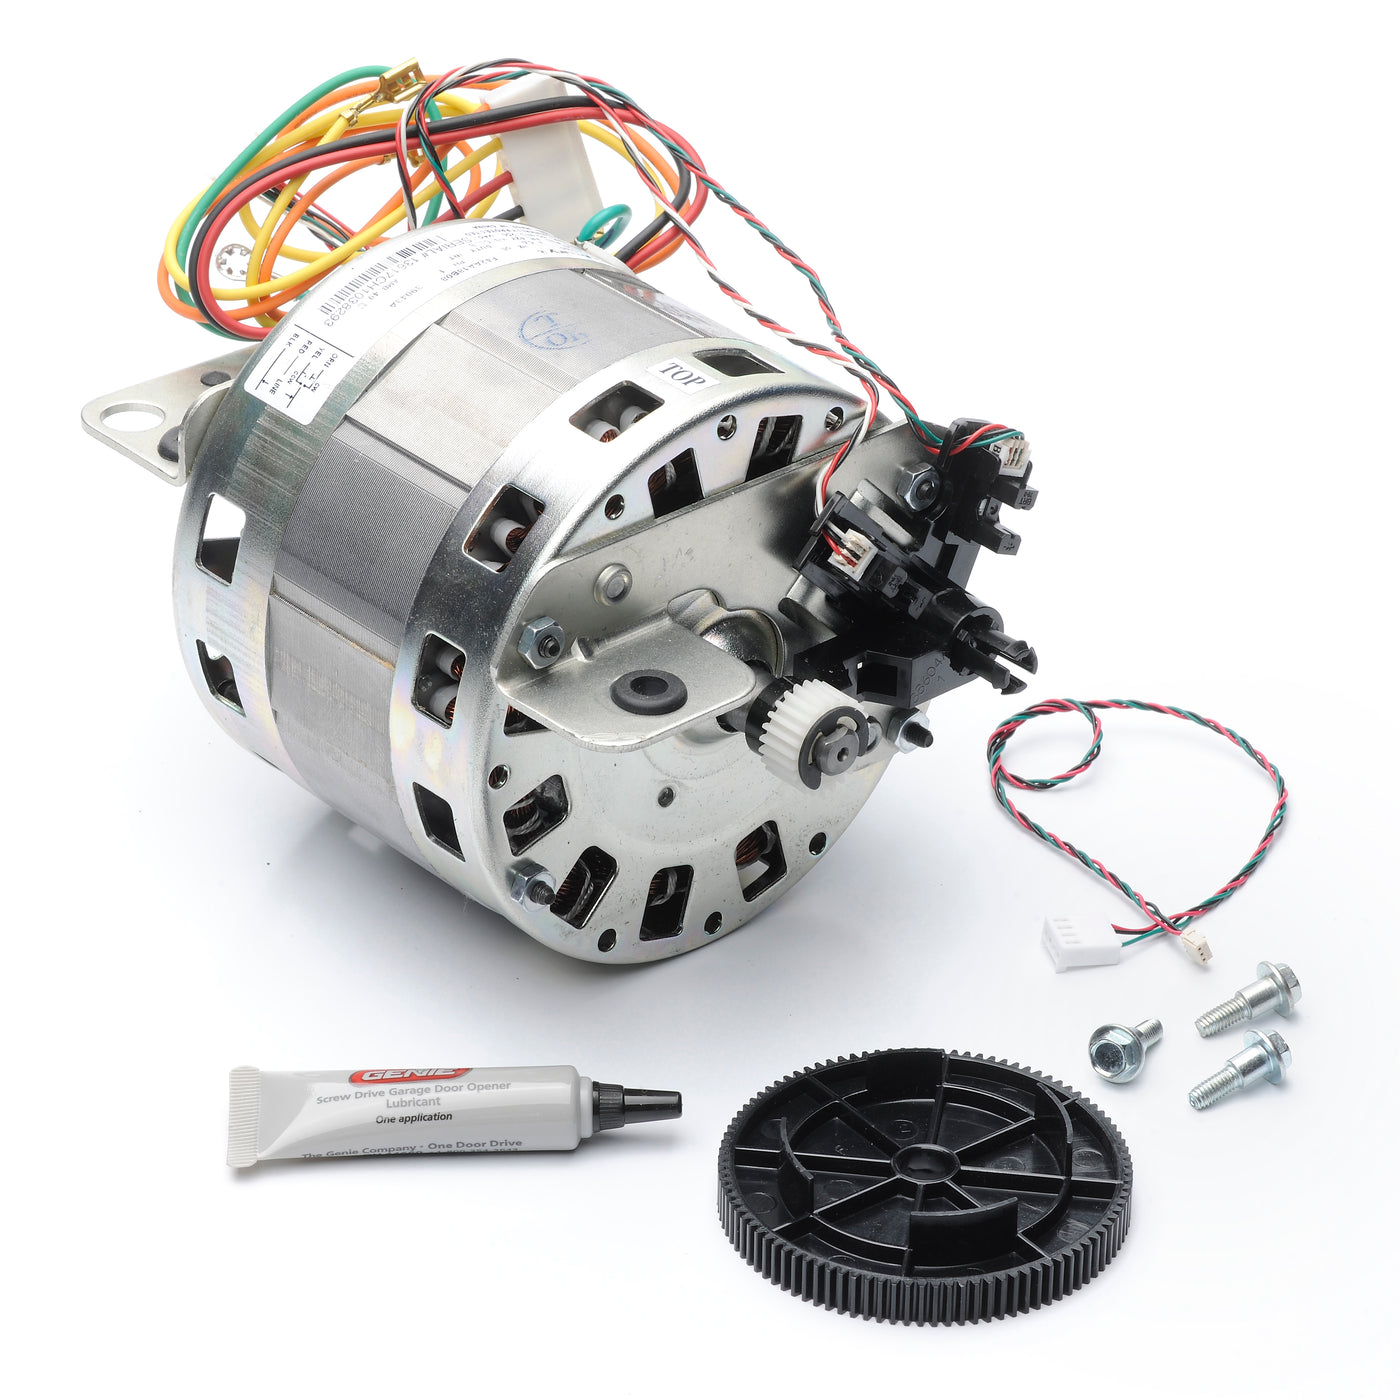 Motor Assembly Dual Encoder Ac Screw Drive 39045r S The Genie Company [ 1400 x 1400 Pixel ]